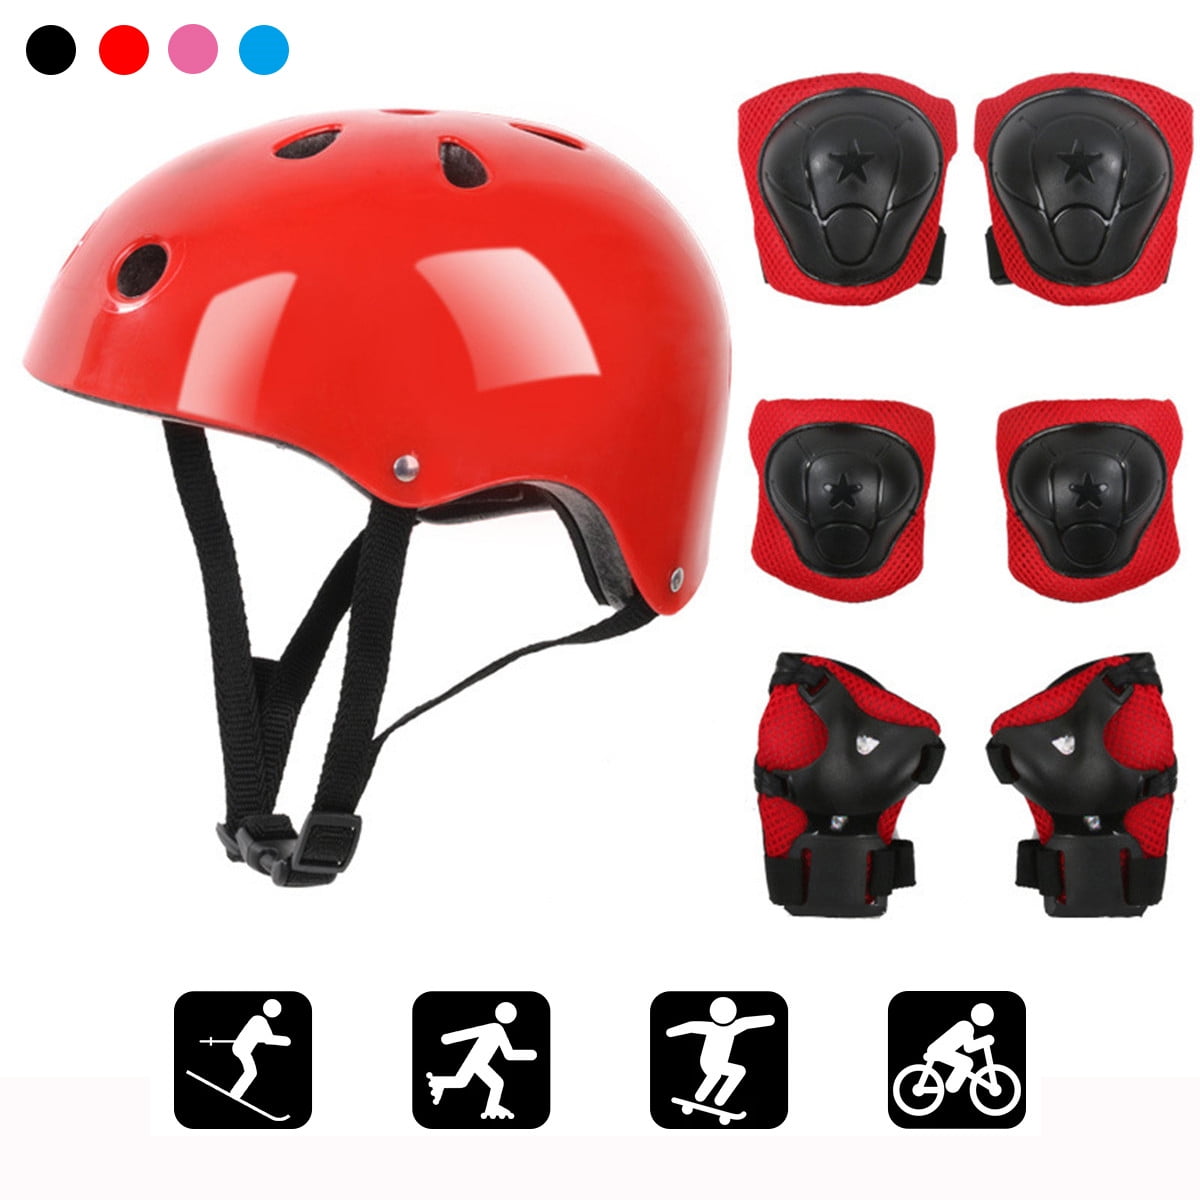 Details about   4 Kids Boys Girls Sport Protective Gear Helmet Knee Wrist Elbow Pad Safety Bike 